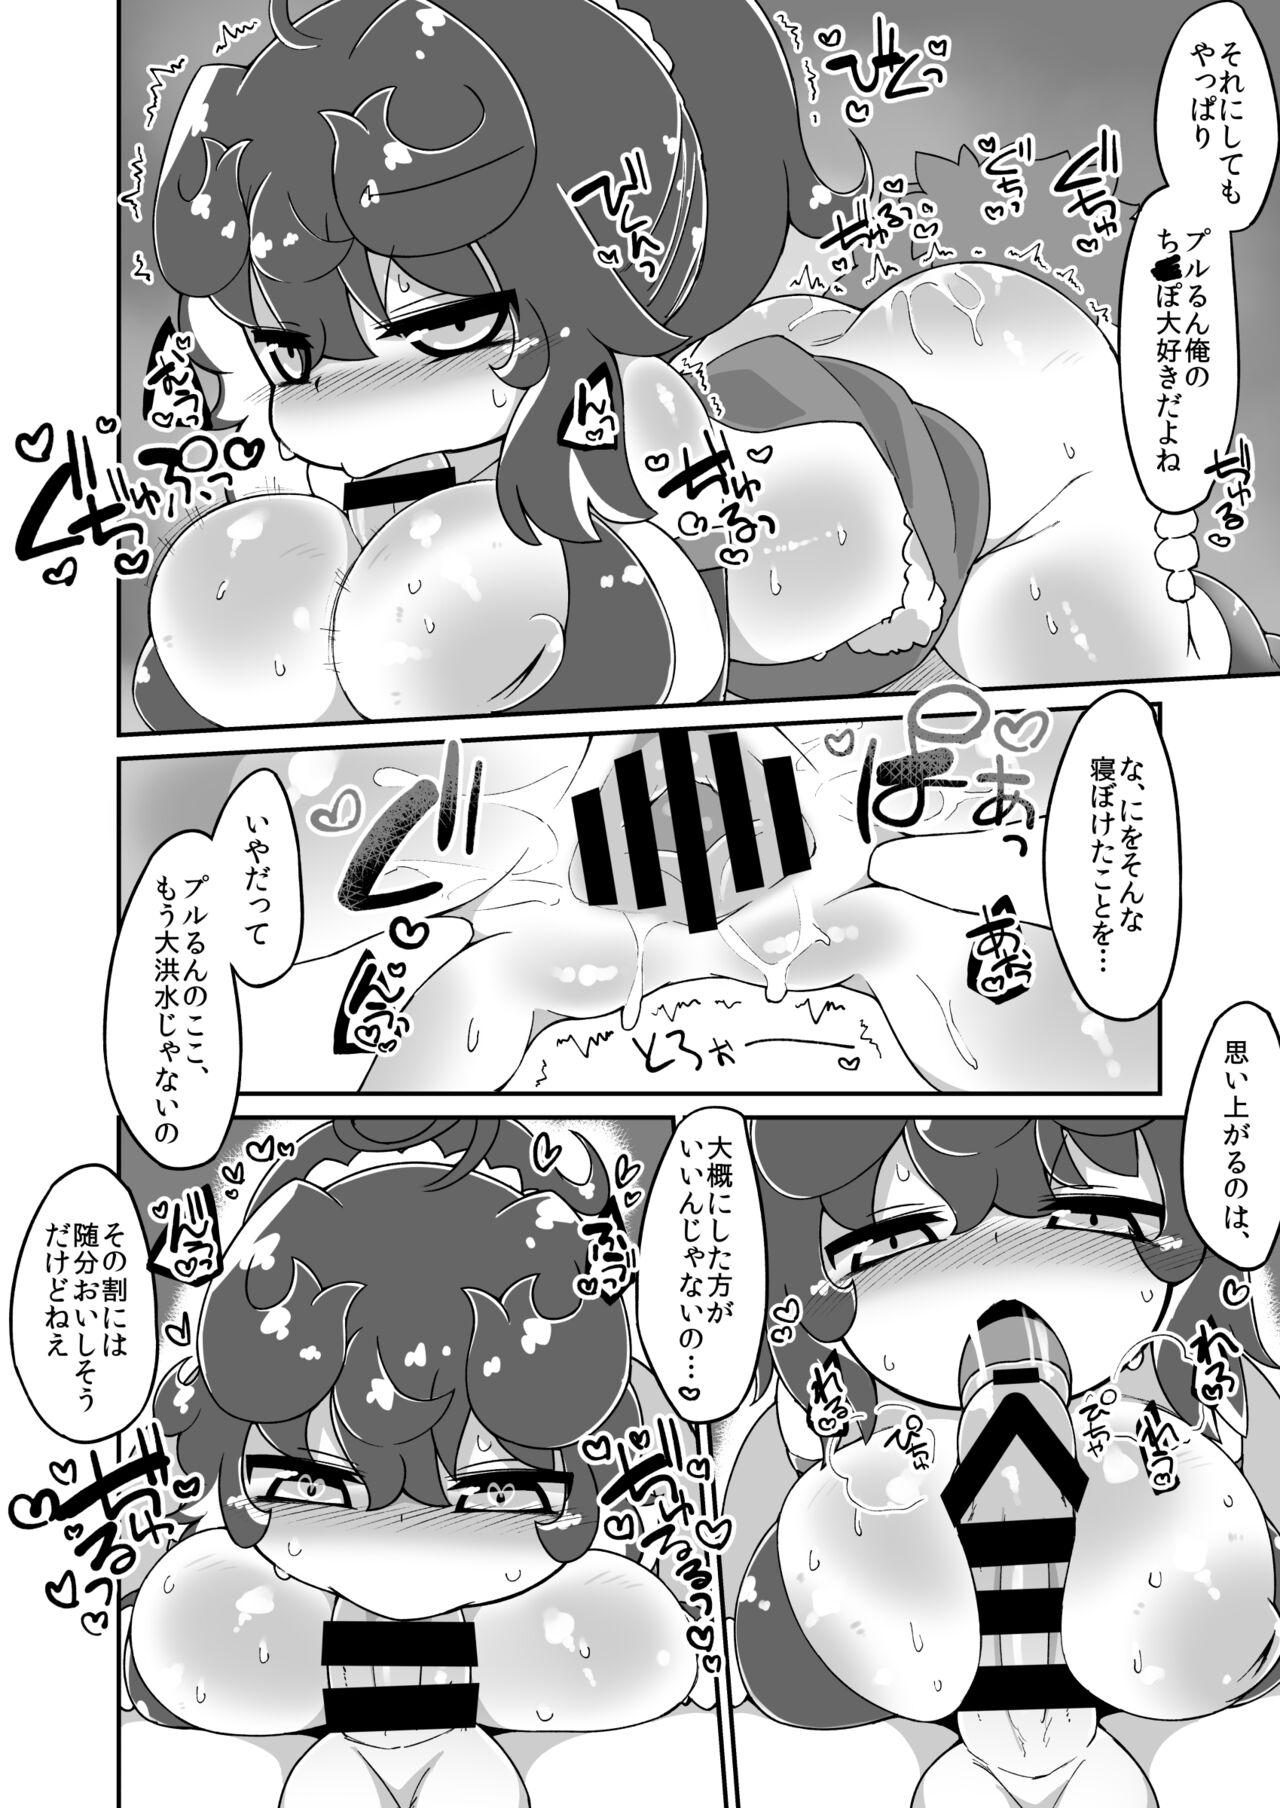 Amature Christmas Prune Ecchi Manga - Bomber girl 18yearsold - Page 2